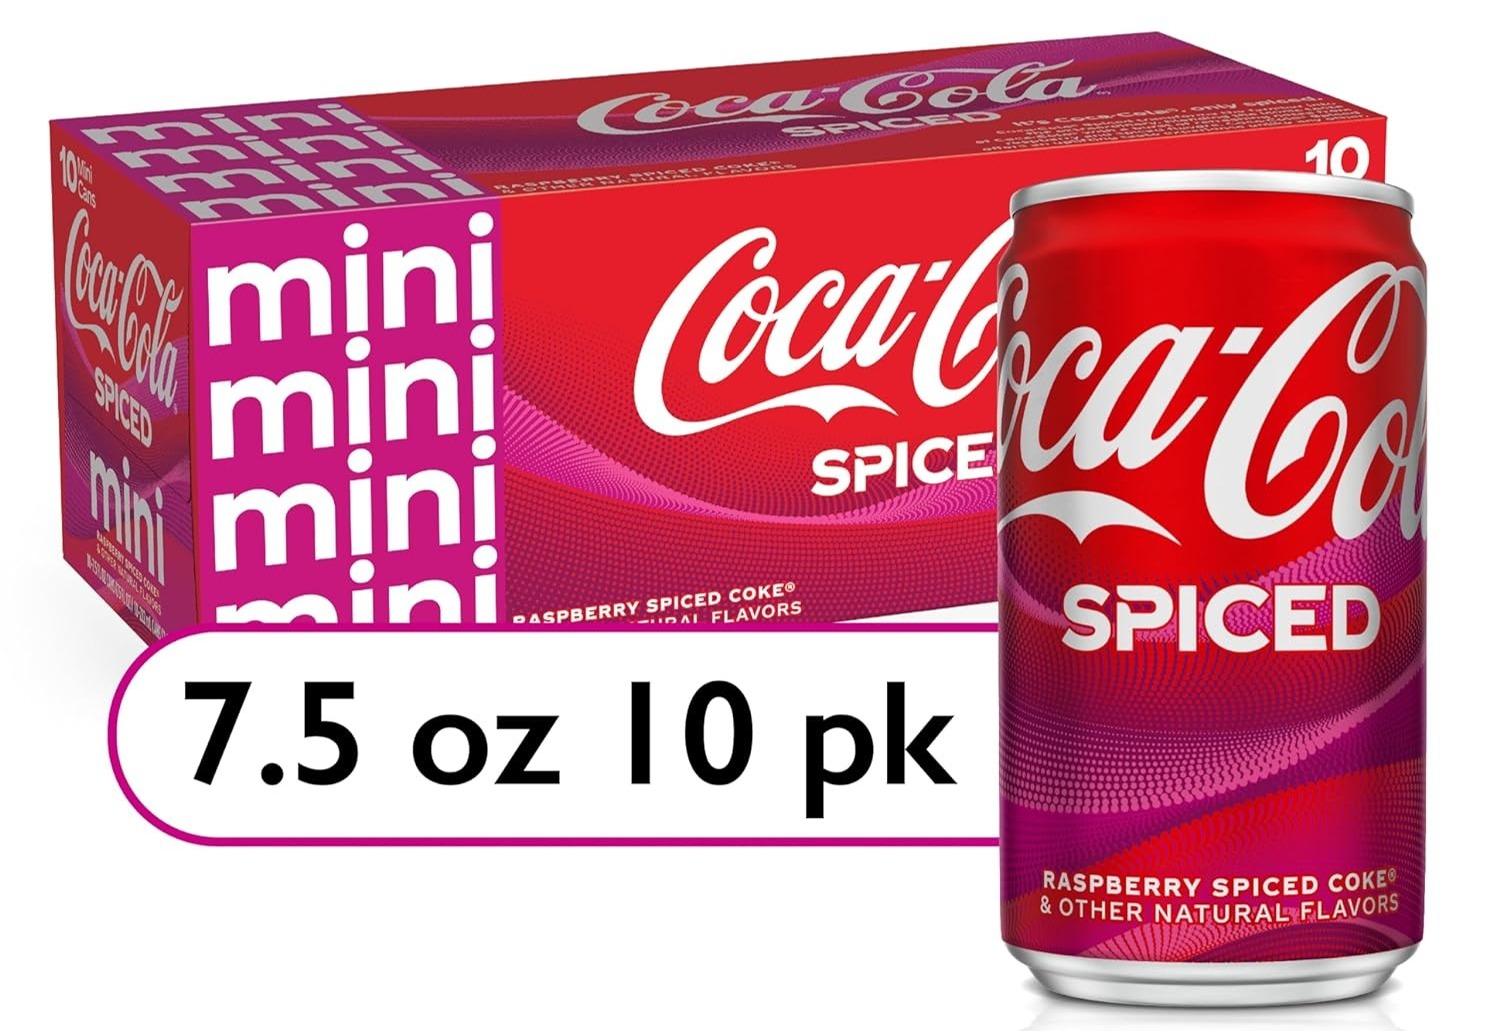 $4.72 w/ S&S: Coca-Cola Spiced 7.5oz 10pk